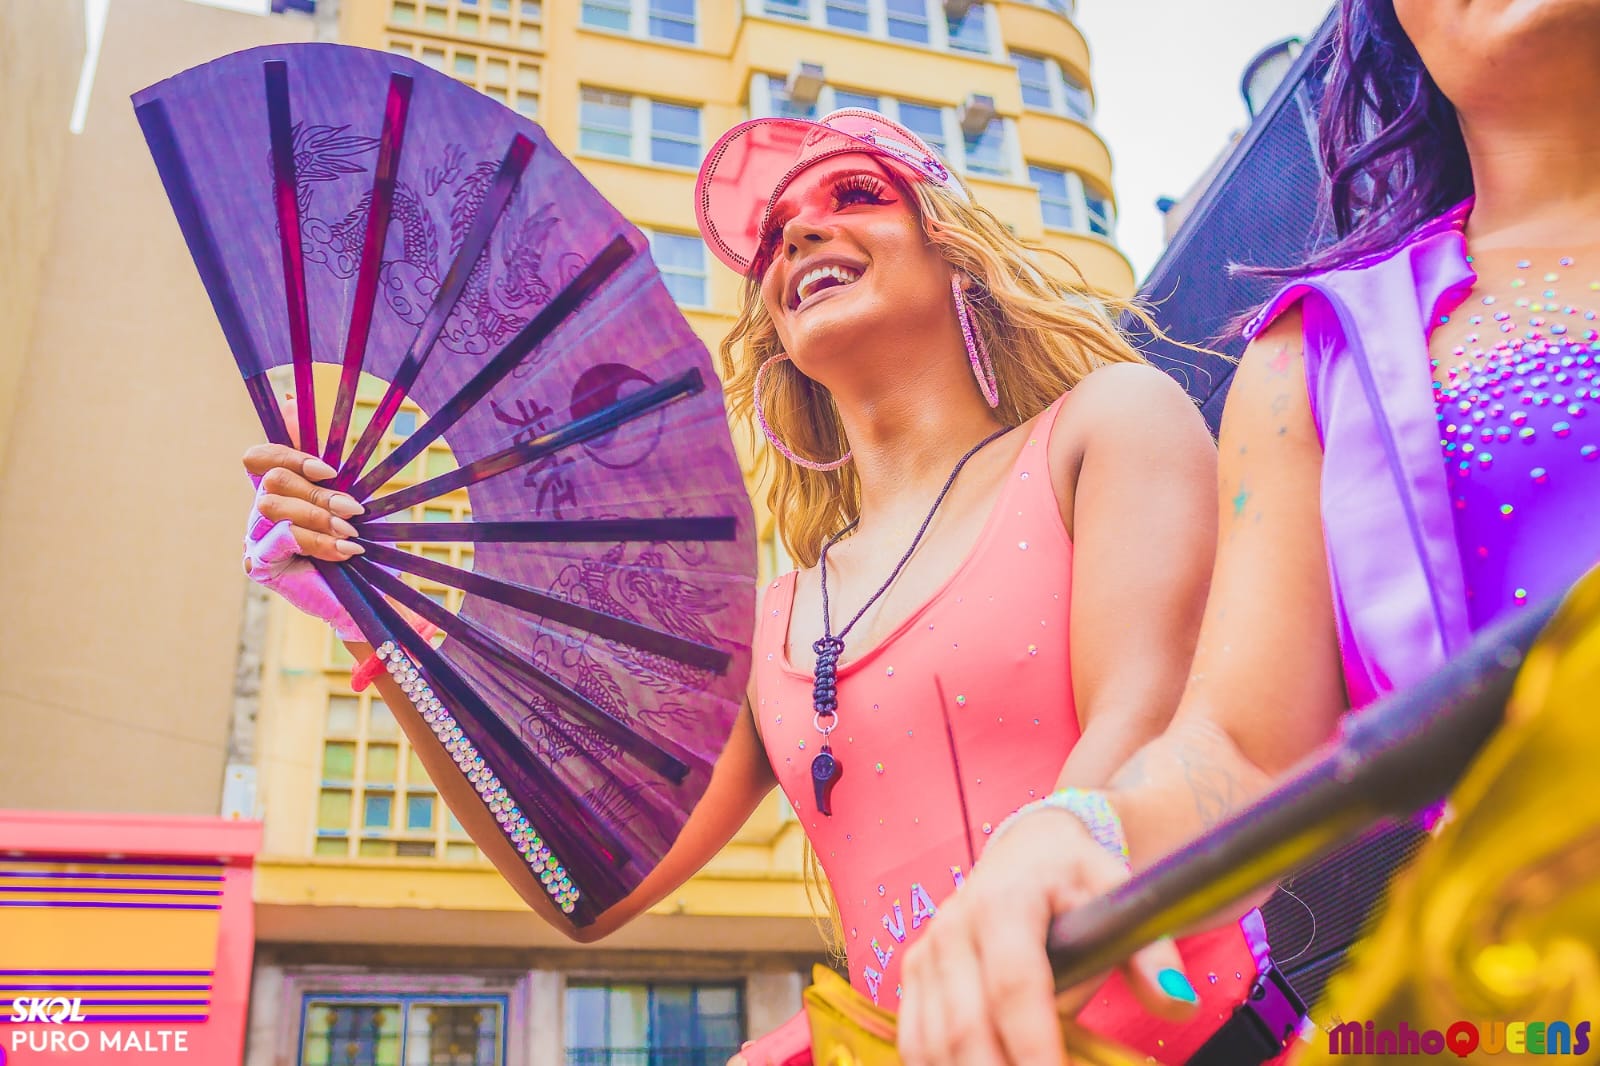 Bloco paulista 'MinhoQueens' que enaltece cultura drag queen desfilará no Carnaval do Rio pela 1ª vez